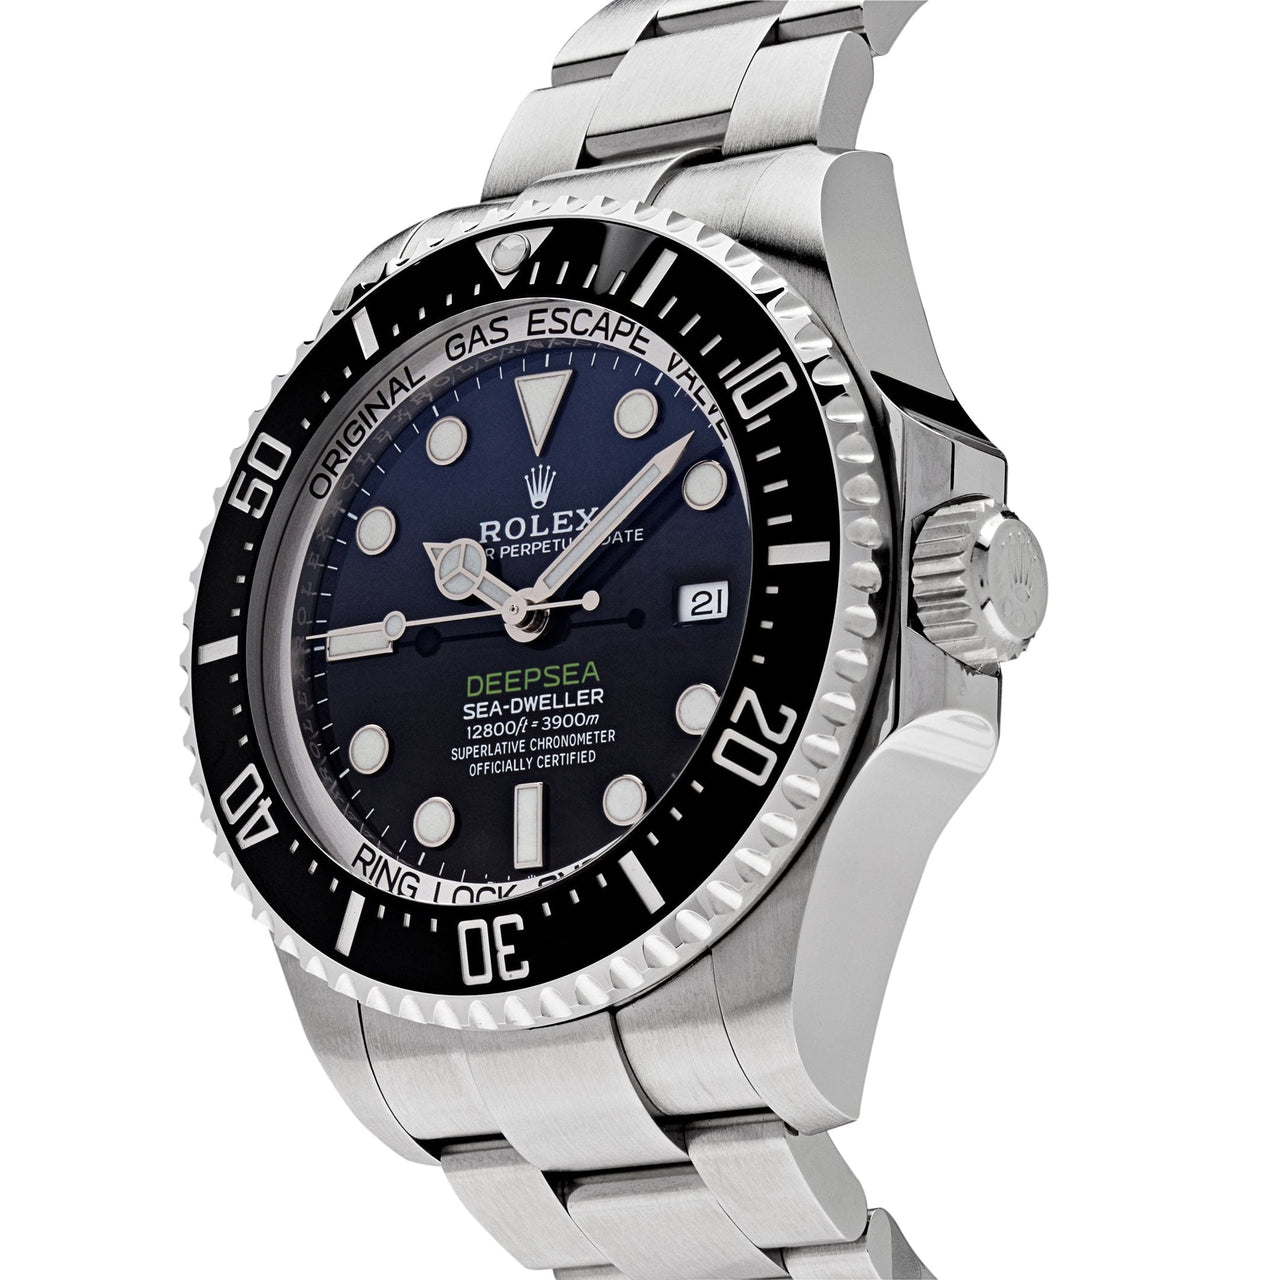 Luxury Watch Rolex Deep Sea Dweller 44mm Stainless Steel Blue-Black Dial 126660 Wrist Aficionado